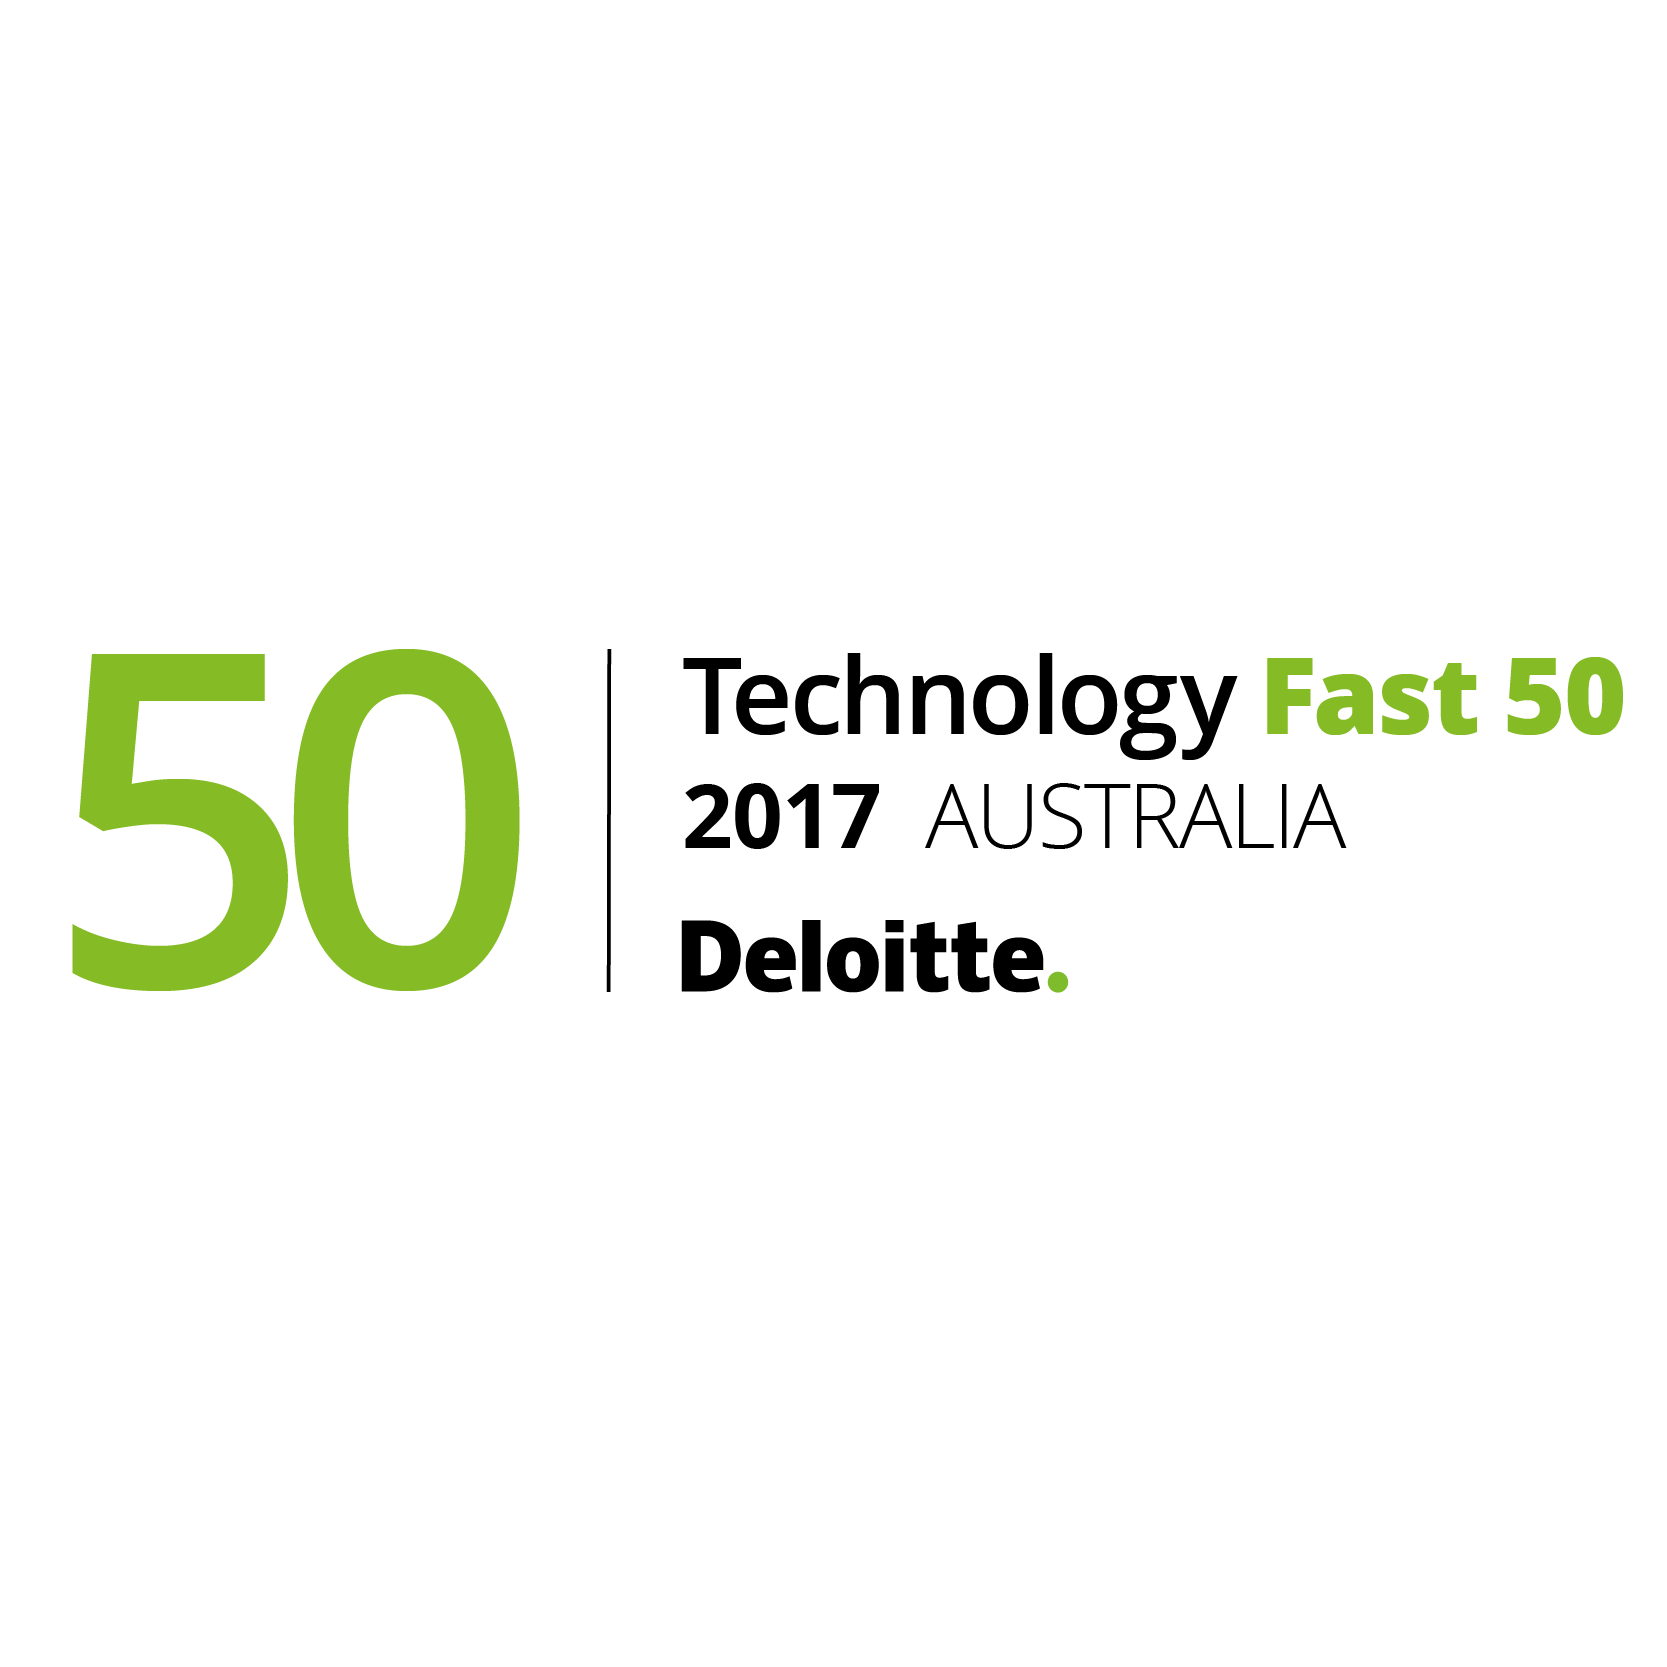 Numerous Australian Fintechs on the Deloitte Technology Fast 50 2017